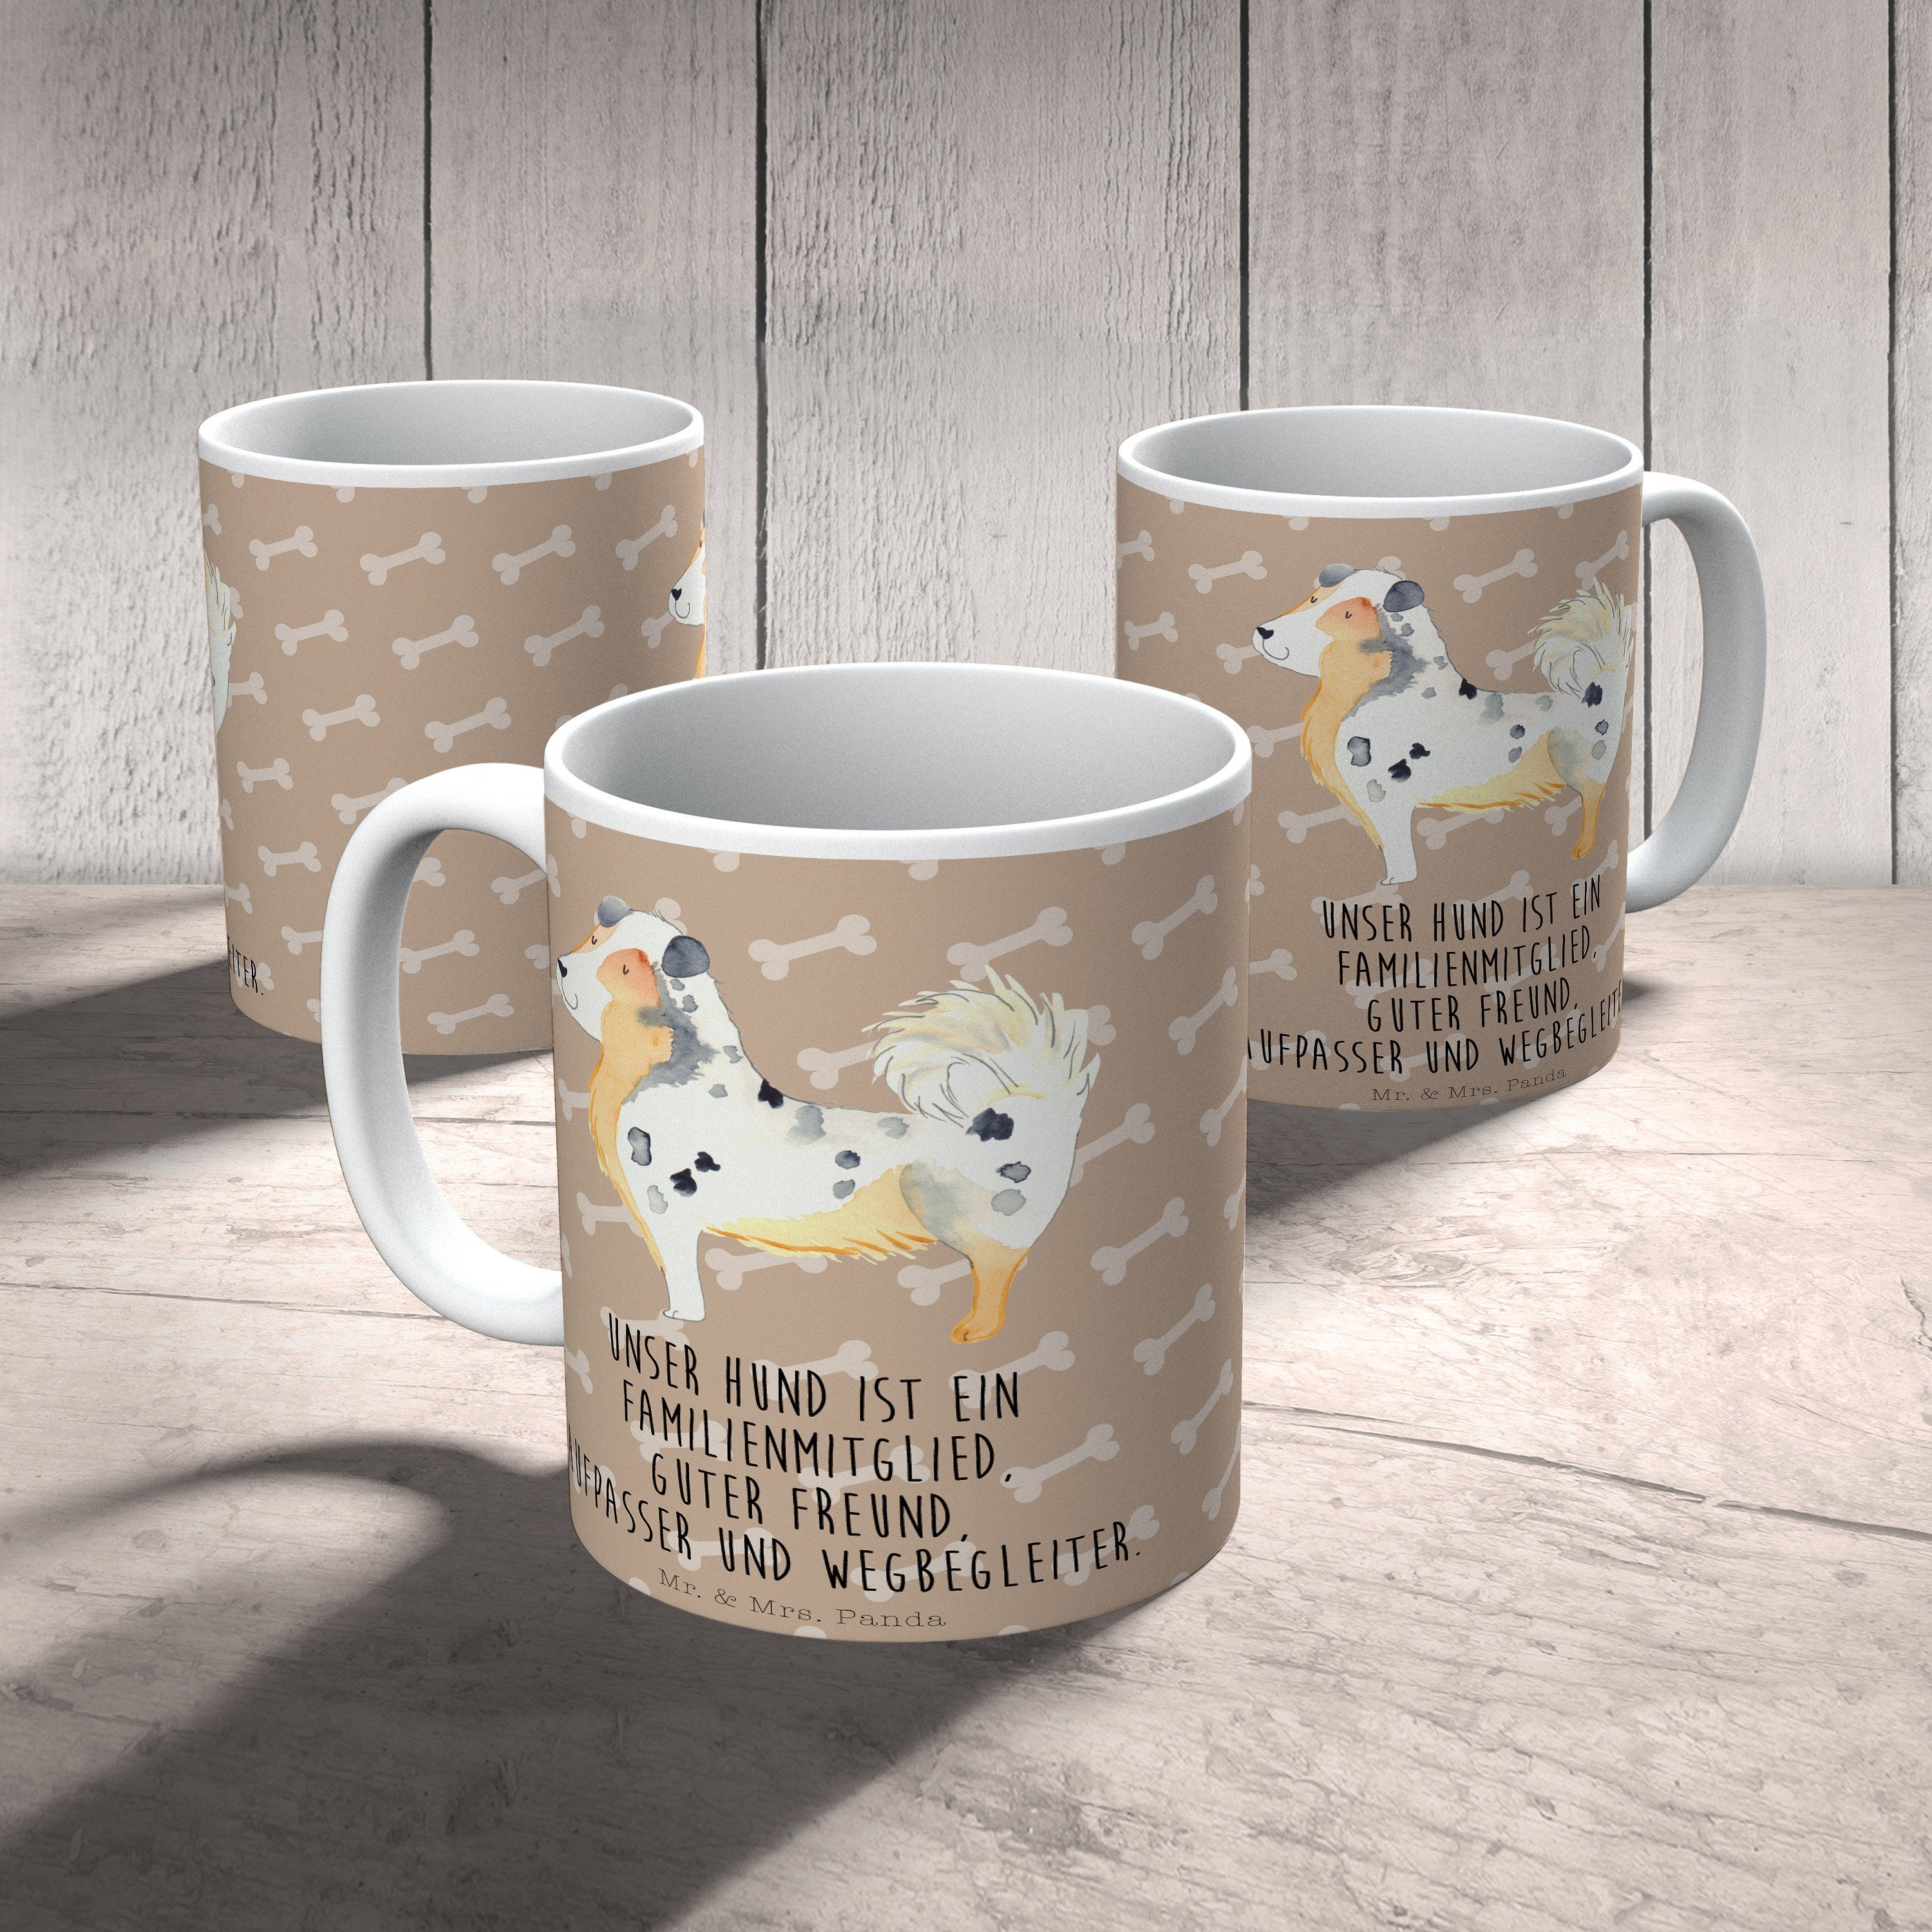 Mr. & Mrs. Panda - Shepherd Tasse Hundeglück Becher, Sprüche, Geschenk, - Australien Hundemo, Keramik